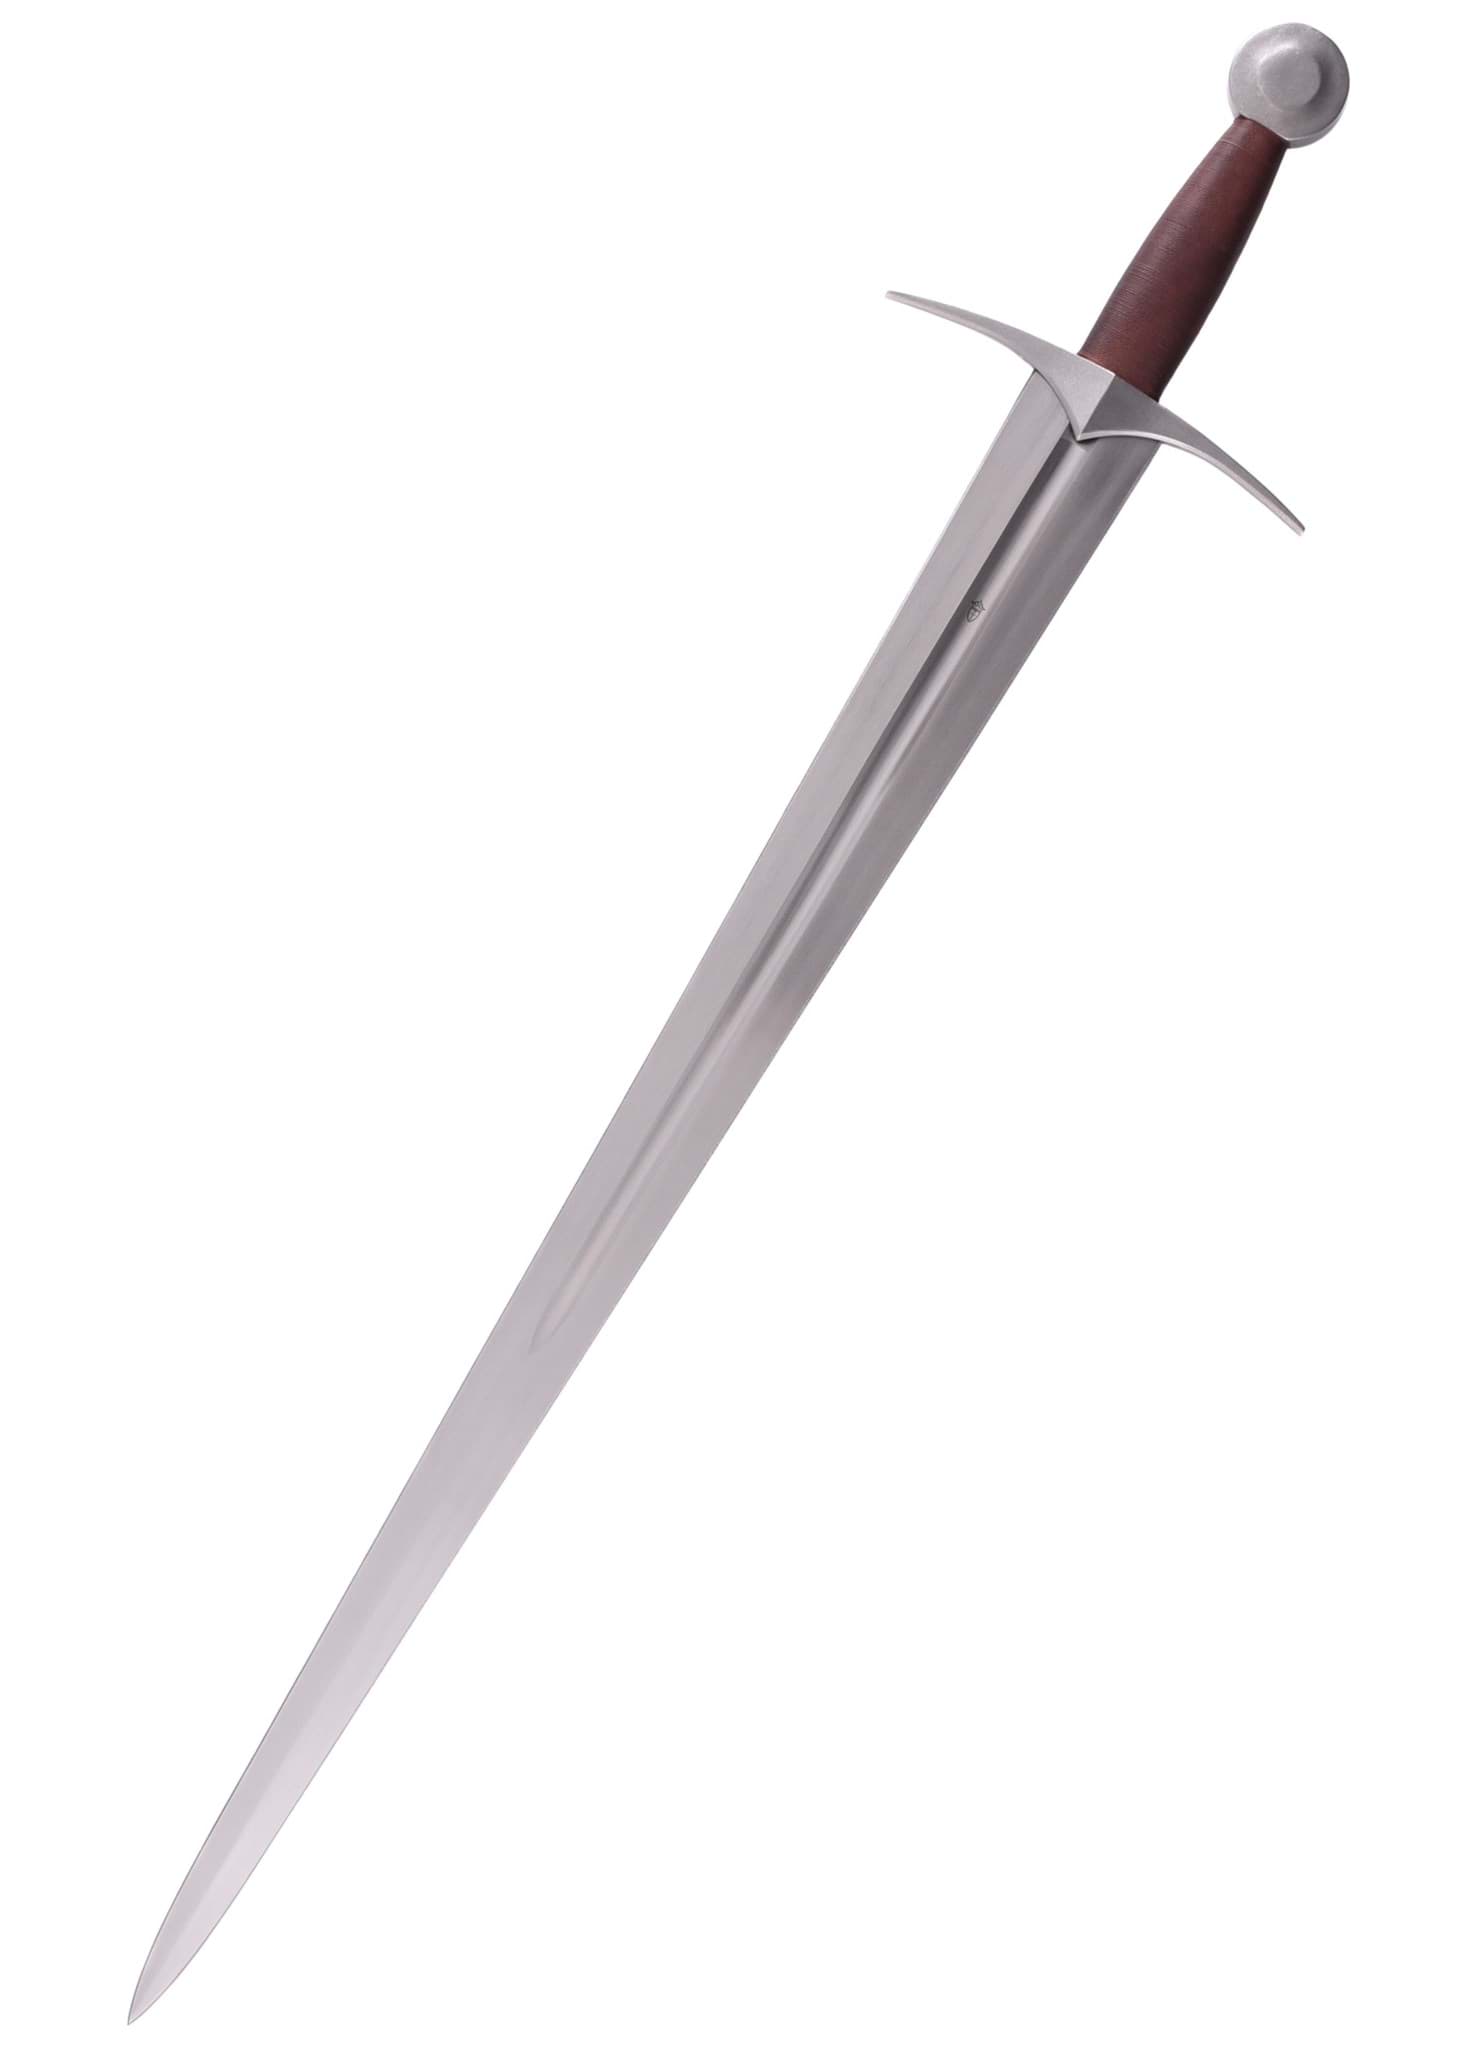 Picture of Kingston Arms - Atrim Type XIV Medieval Sword